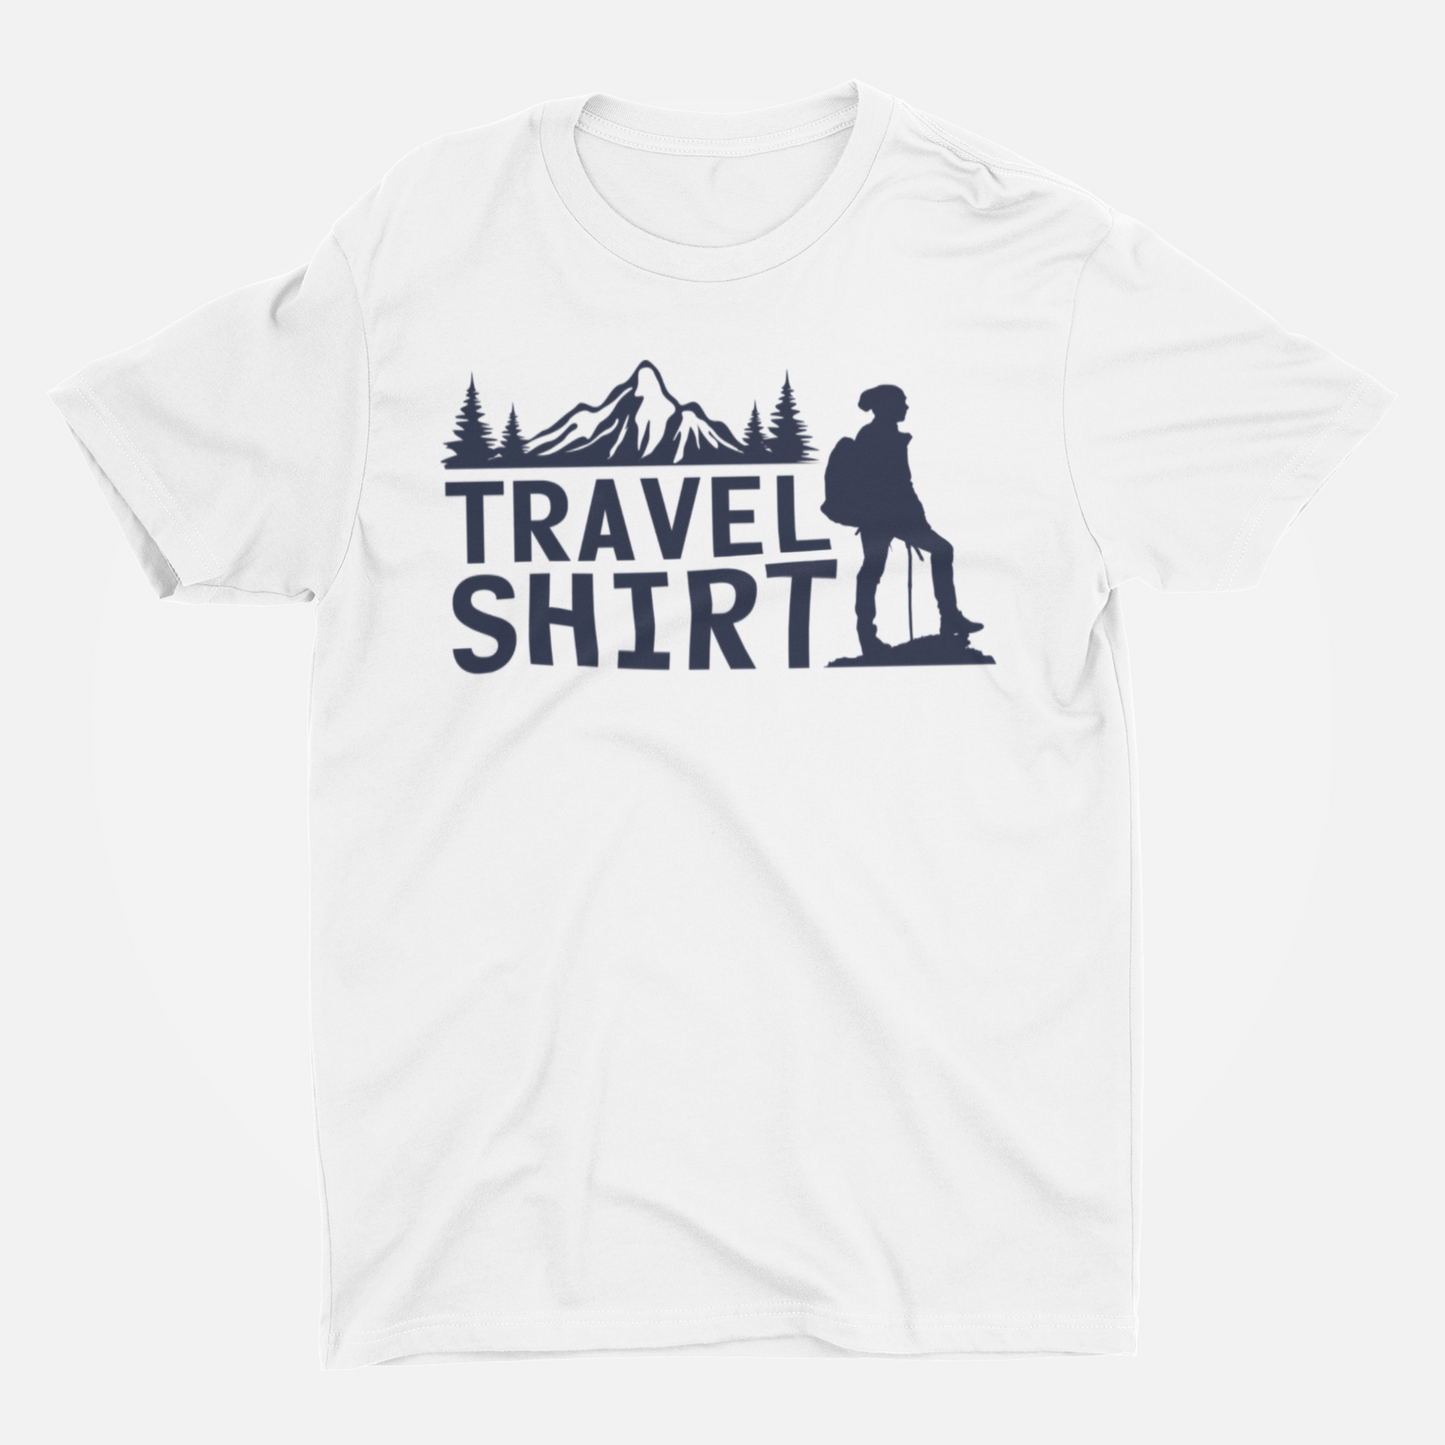 Travel Shirt White Round Neck T-Shirt for Men